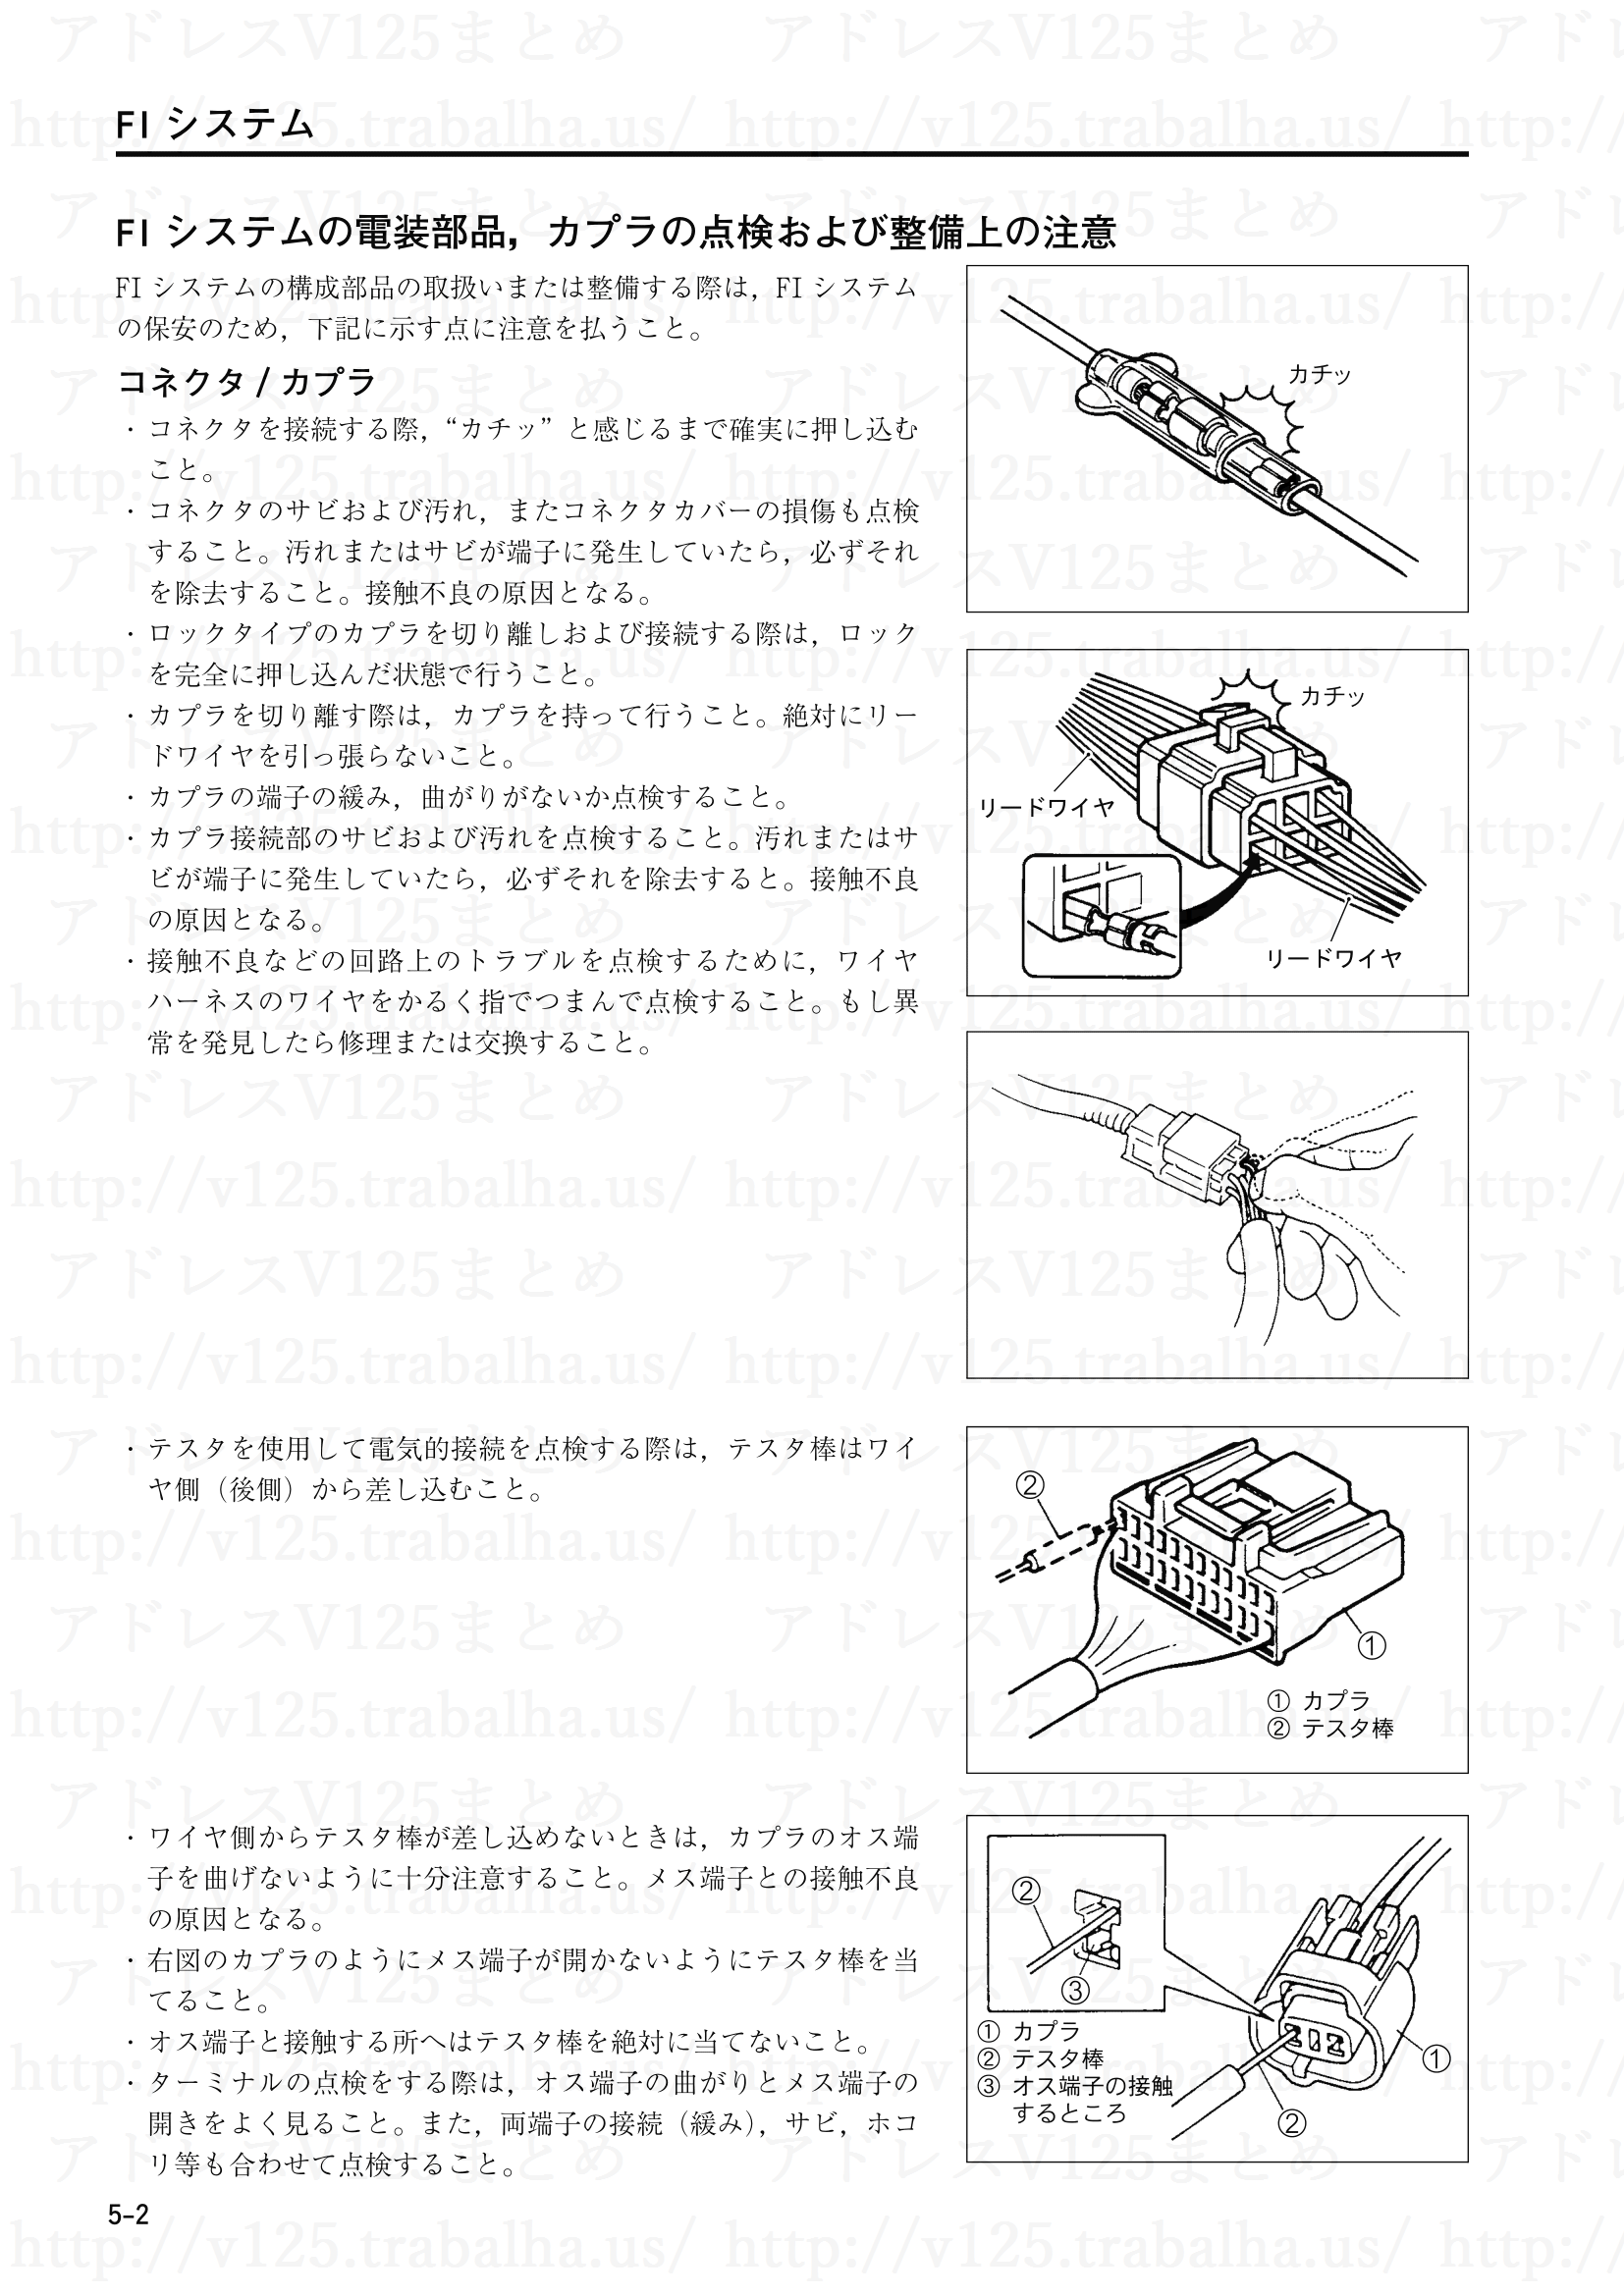 5-2【FIシステム】FIシステムの電装部品、カプラの点検及び整備上の注意